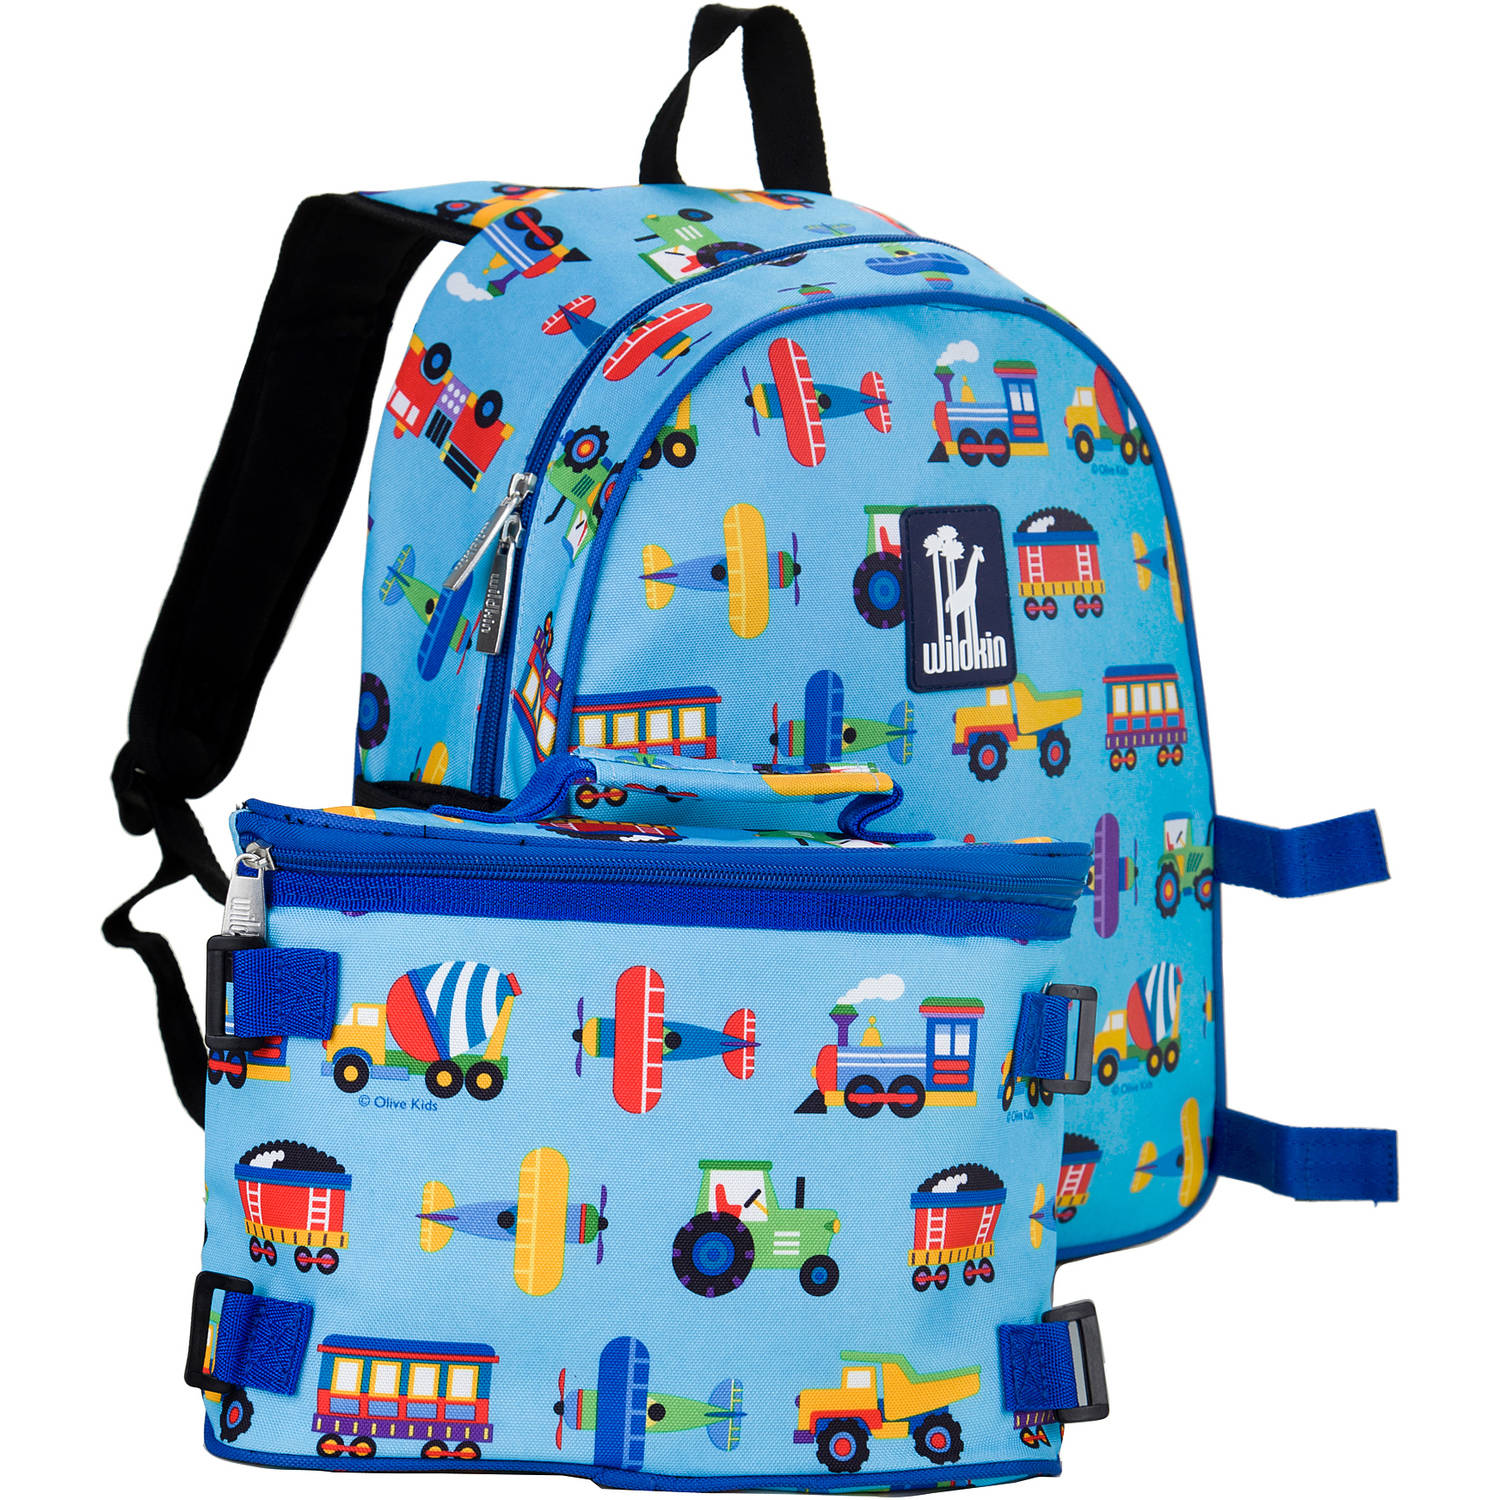 Wildkin Trains, Planes, Trucks Bogo Kids Backpack for Boys and Girls - image 2 of 3